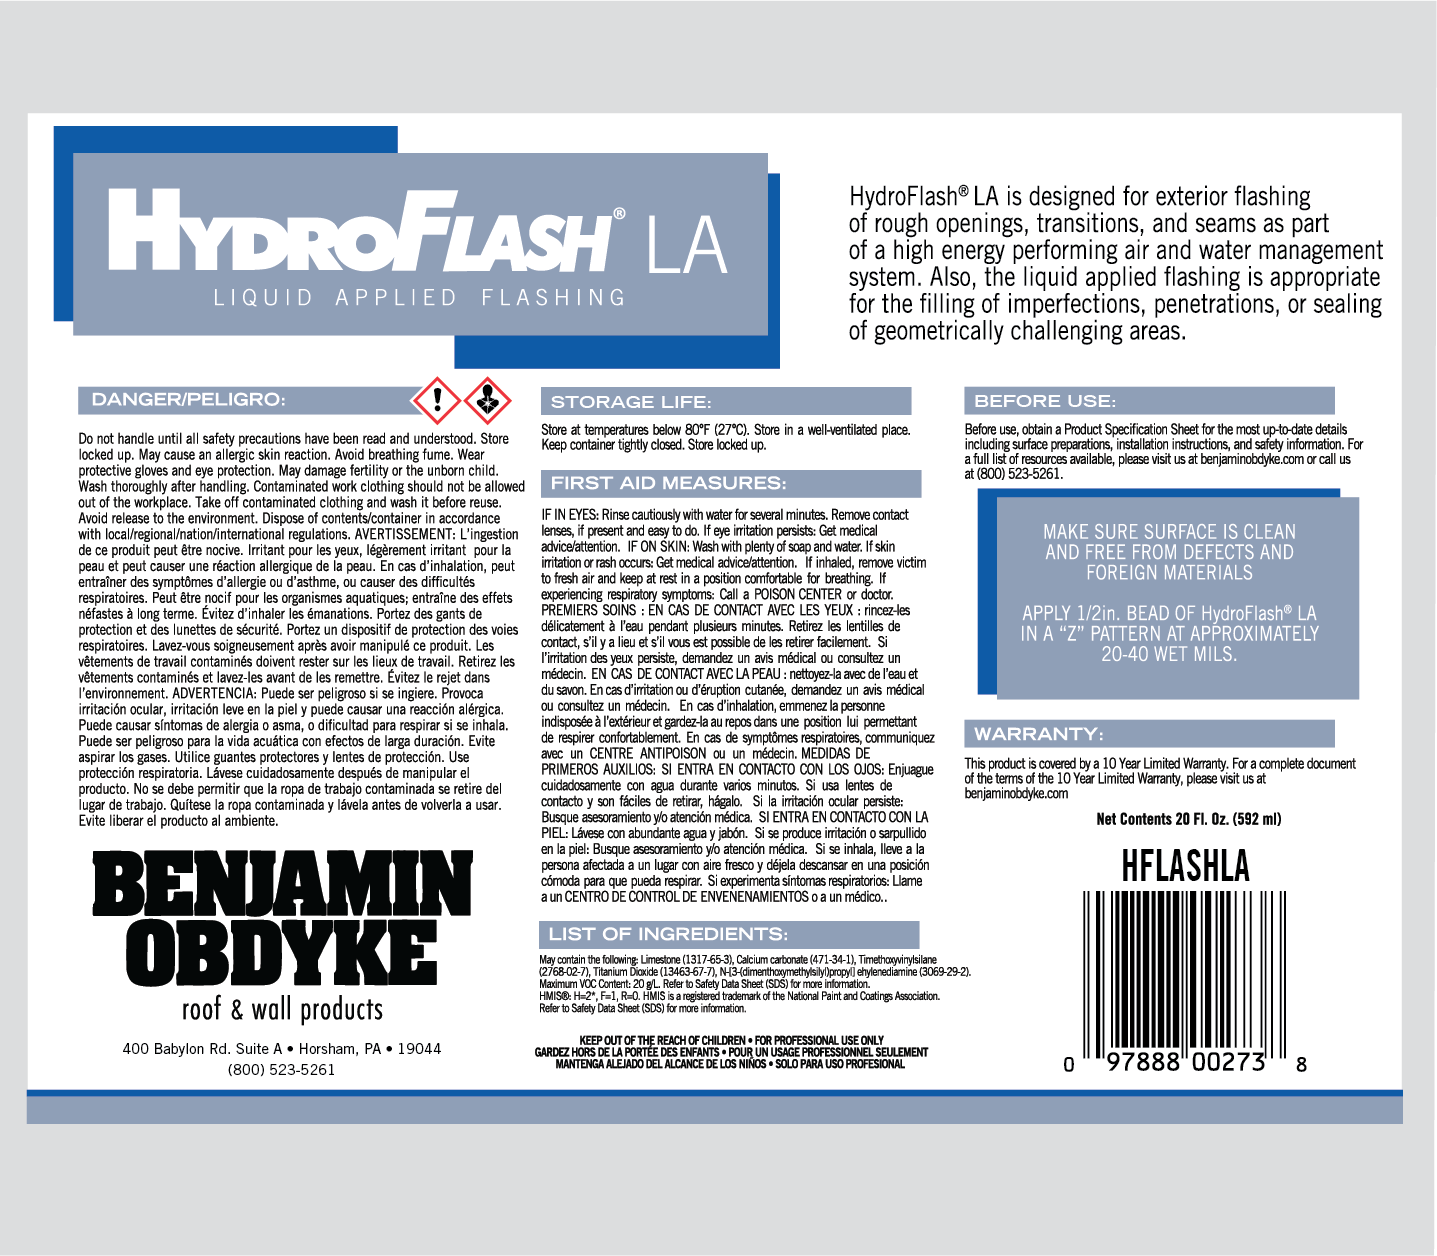 HydroFlash LA Packaging